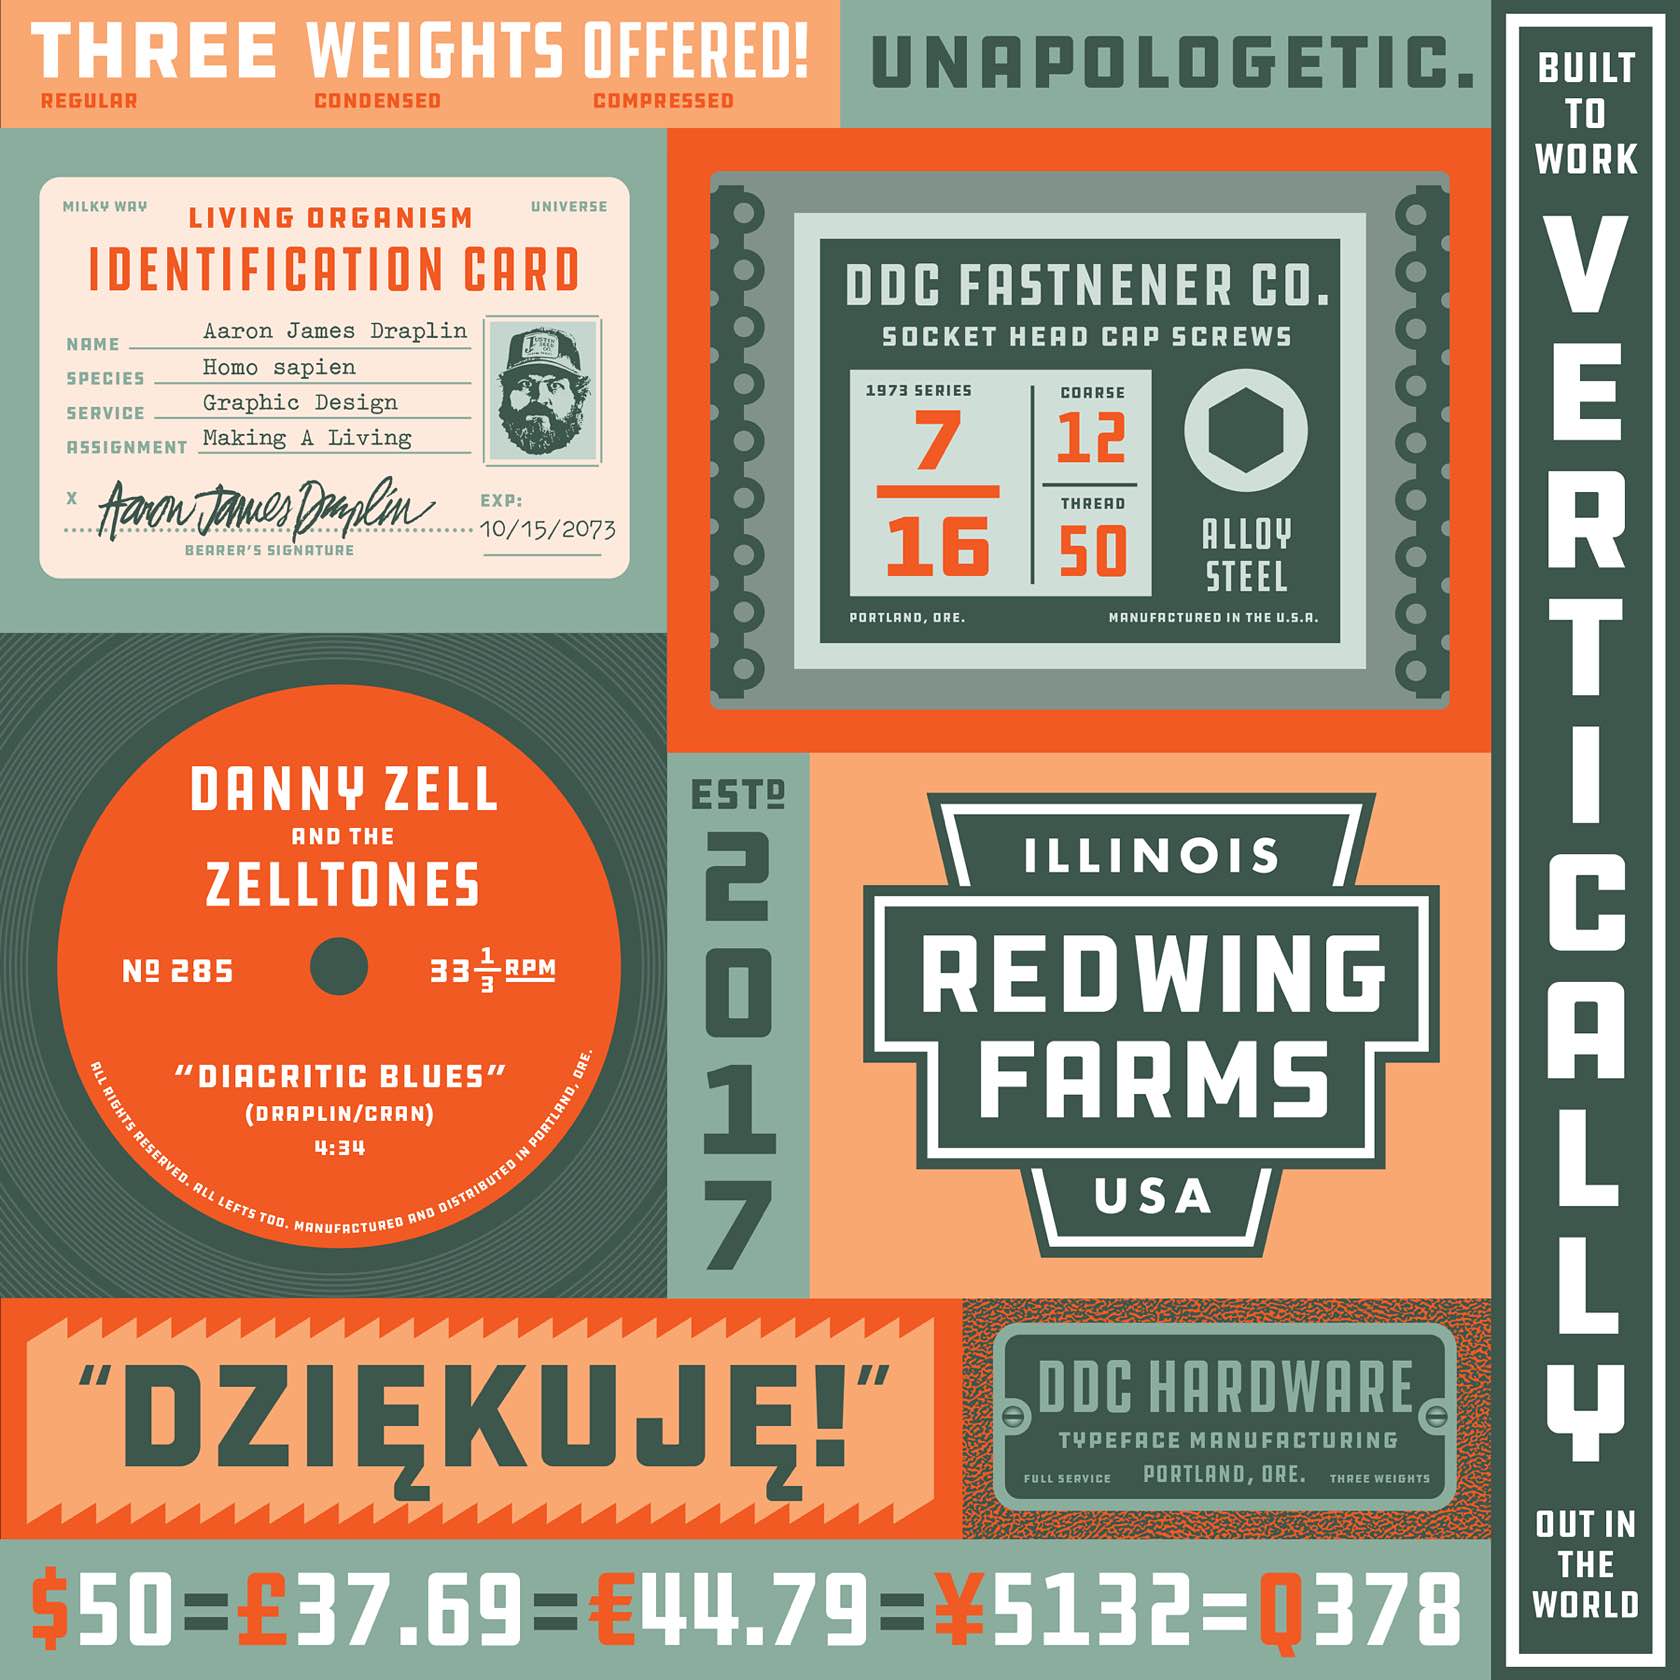 ddc-hardware-typeface-by-draplin-design-co-2